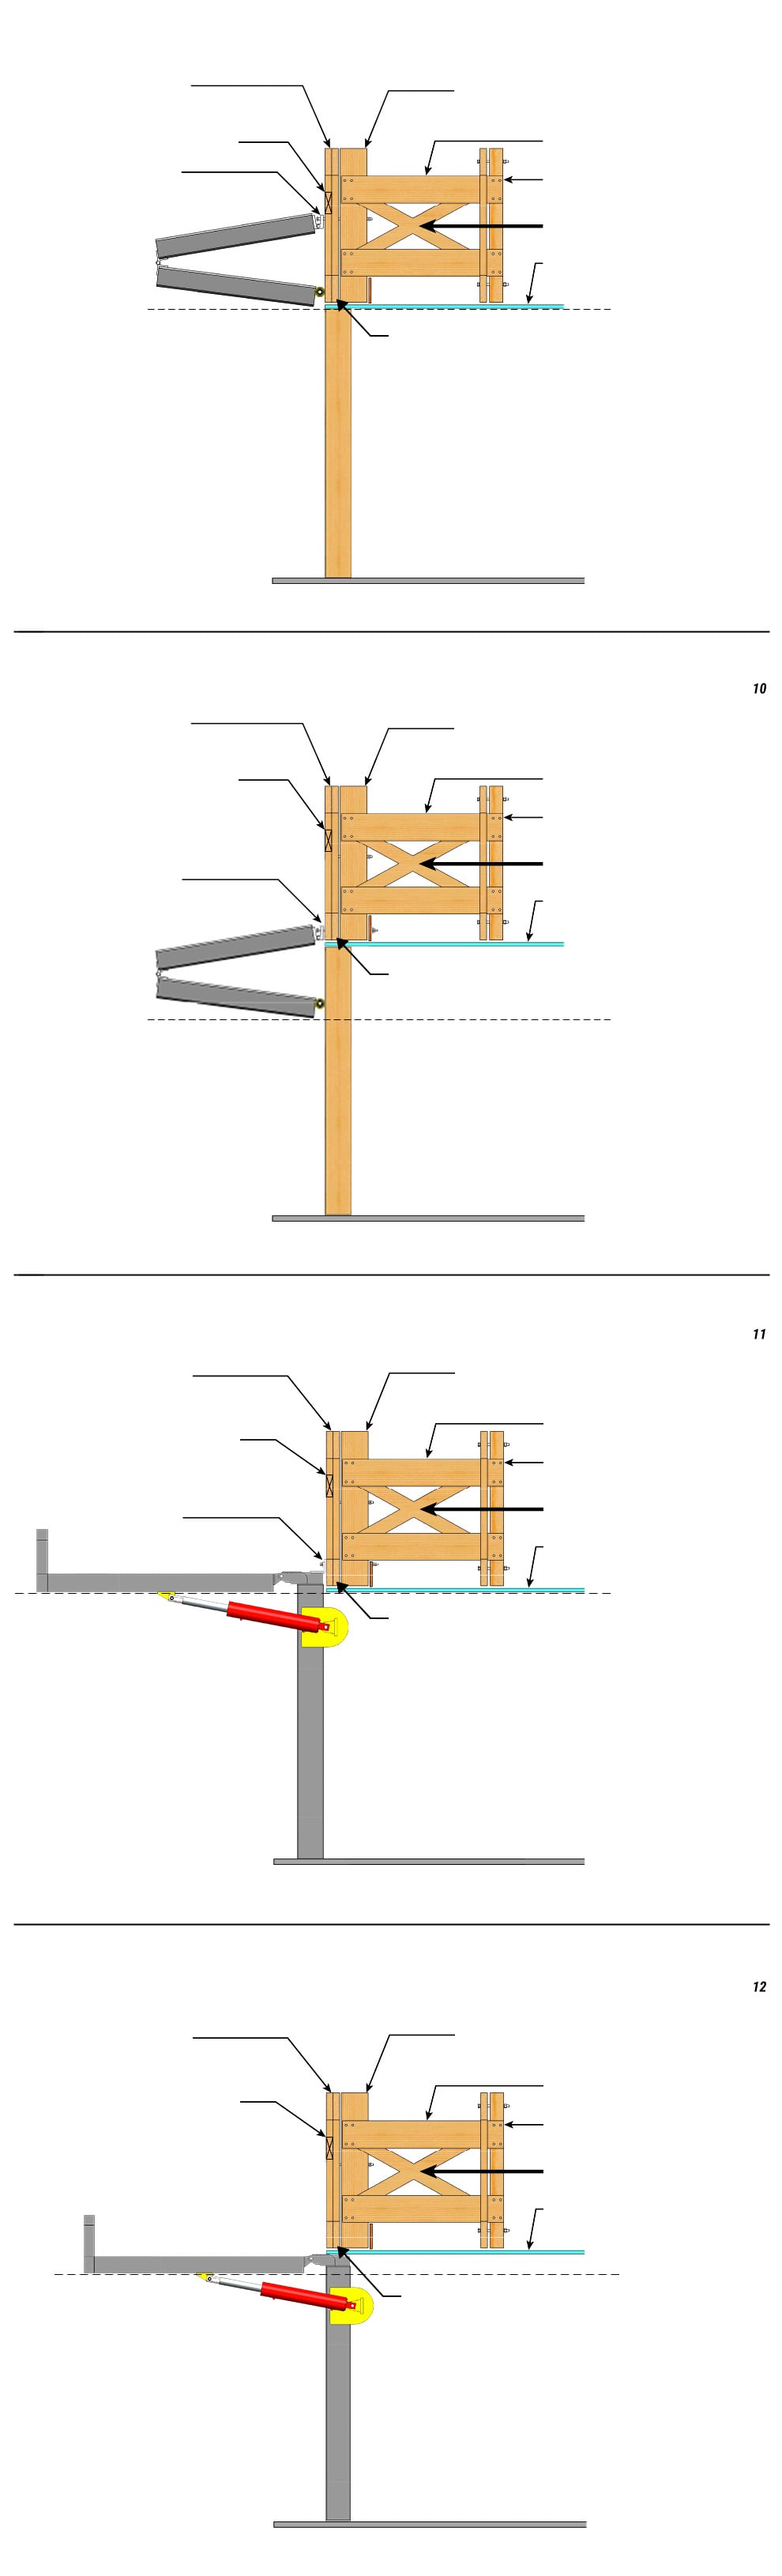 Diagram showing different endwall column bracing configurations